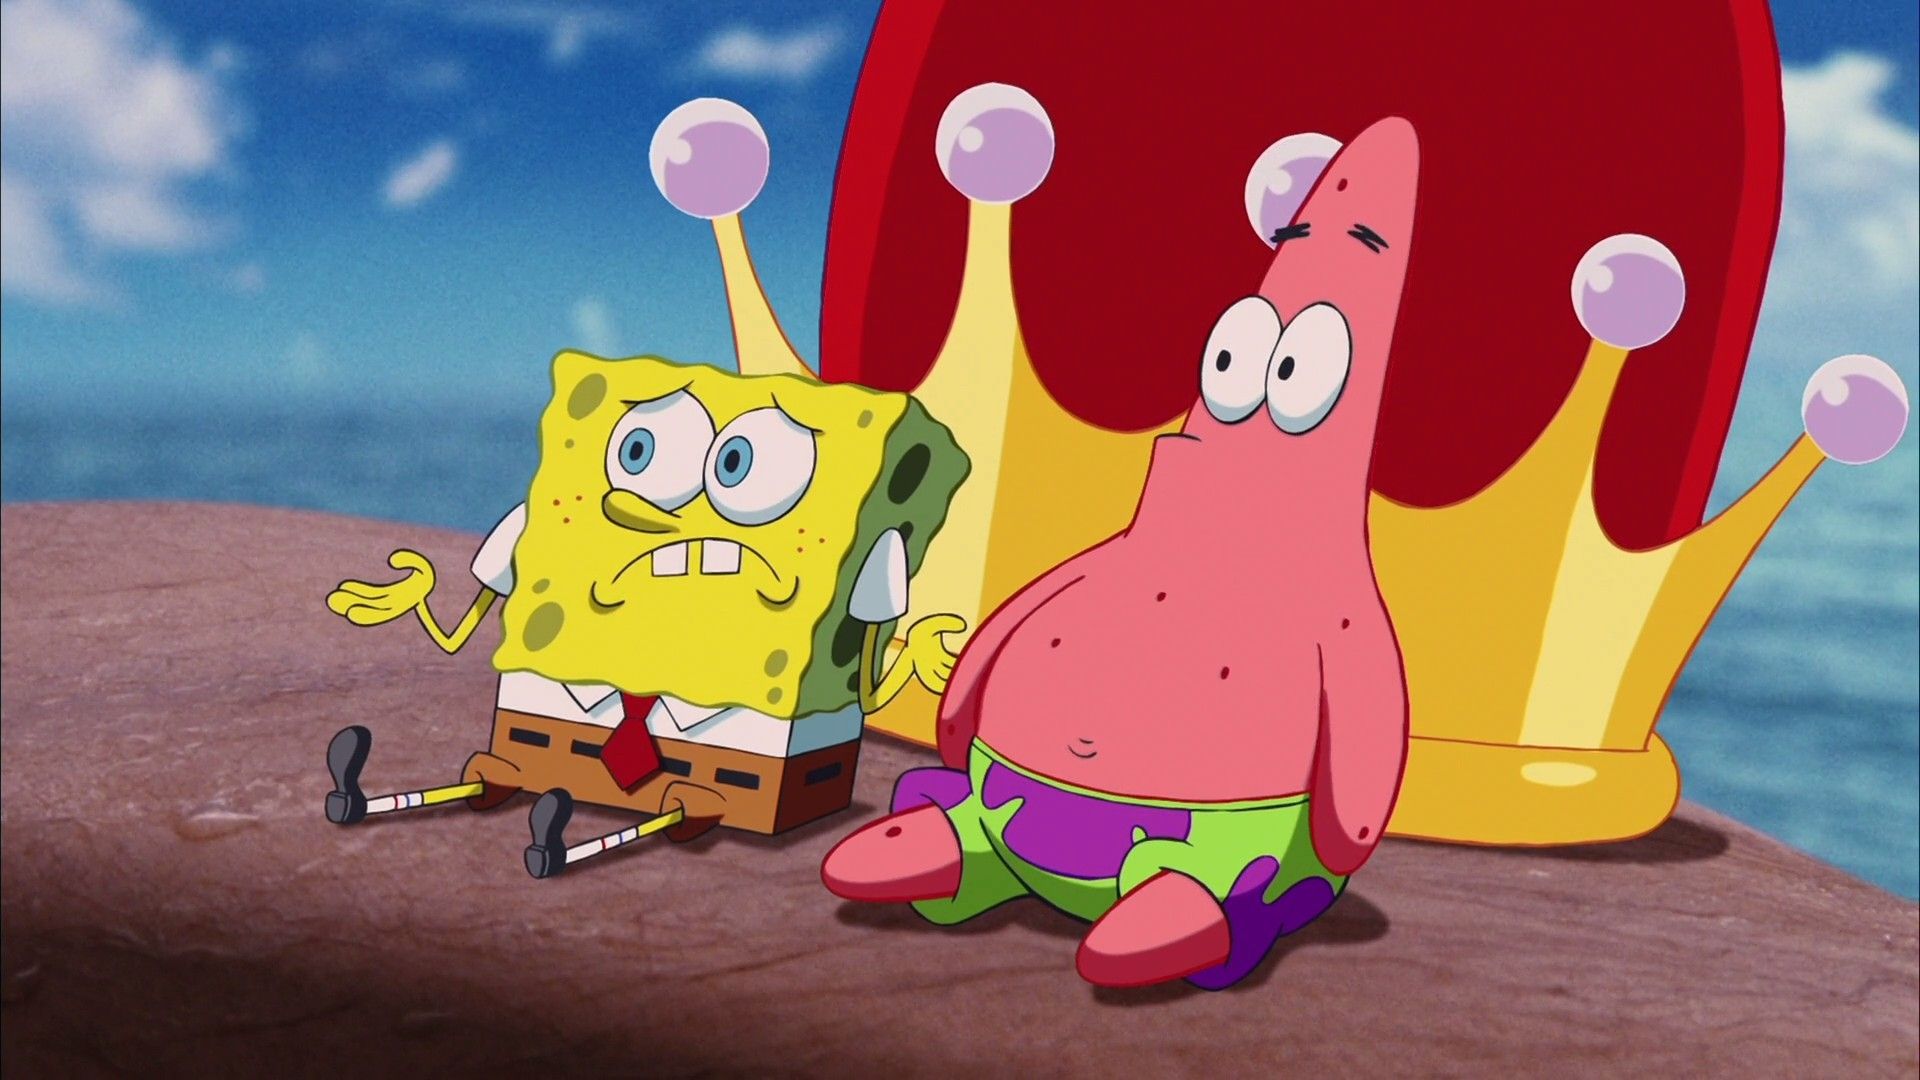 A cartoon sponge and squid sitting on the ground - SpongeBob